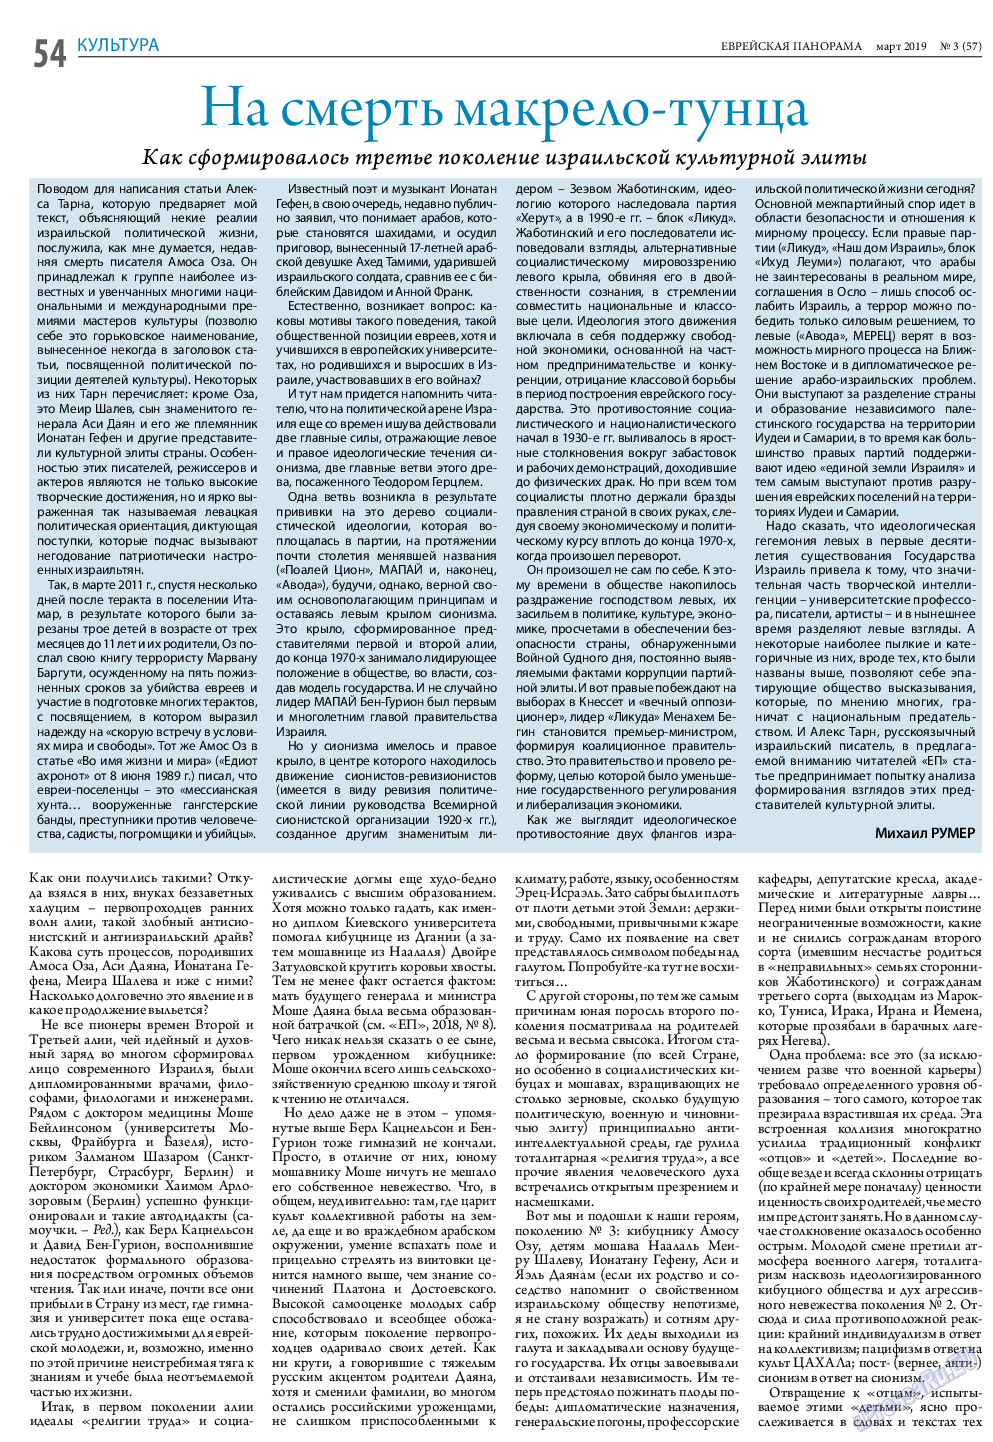 Еврейская панорама, газета. 2019 №3 стр.54